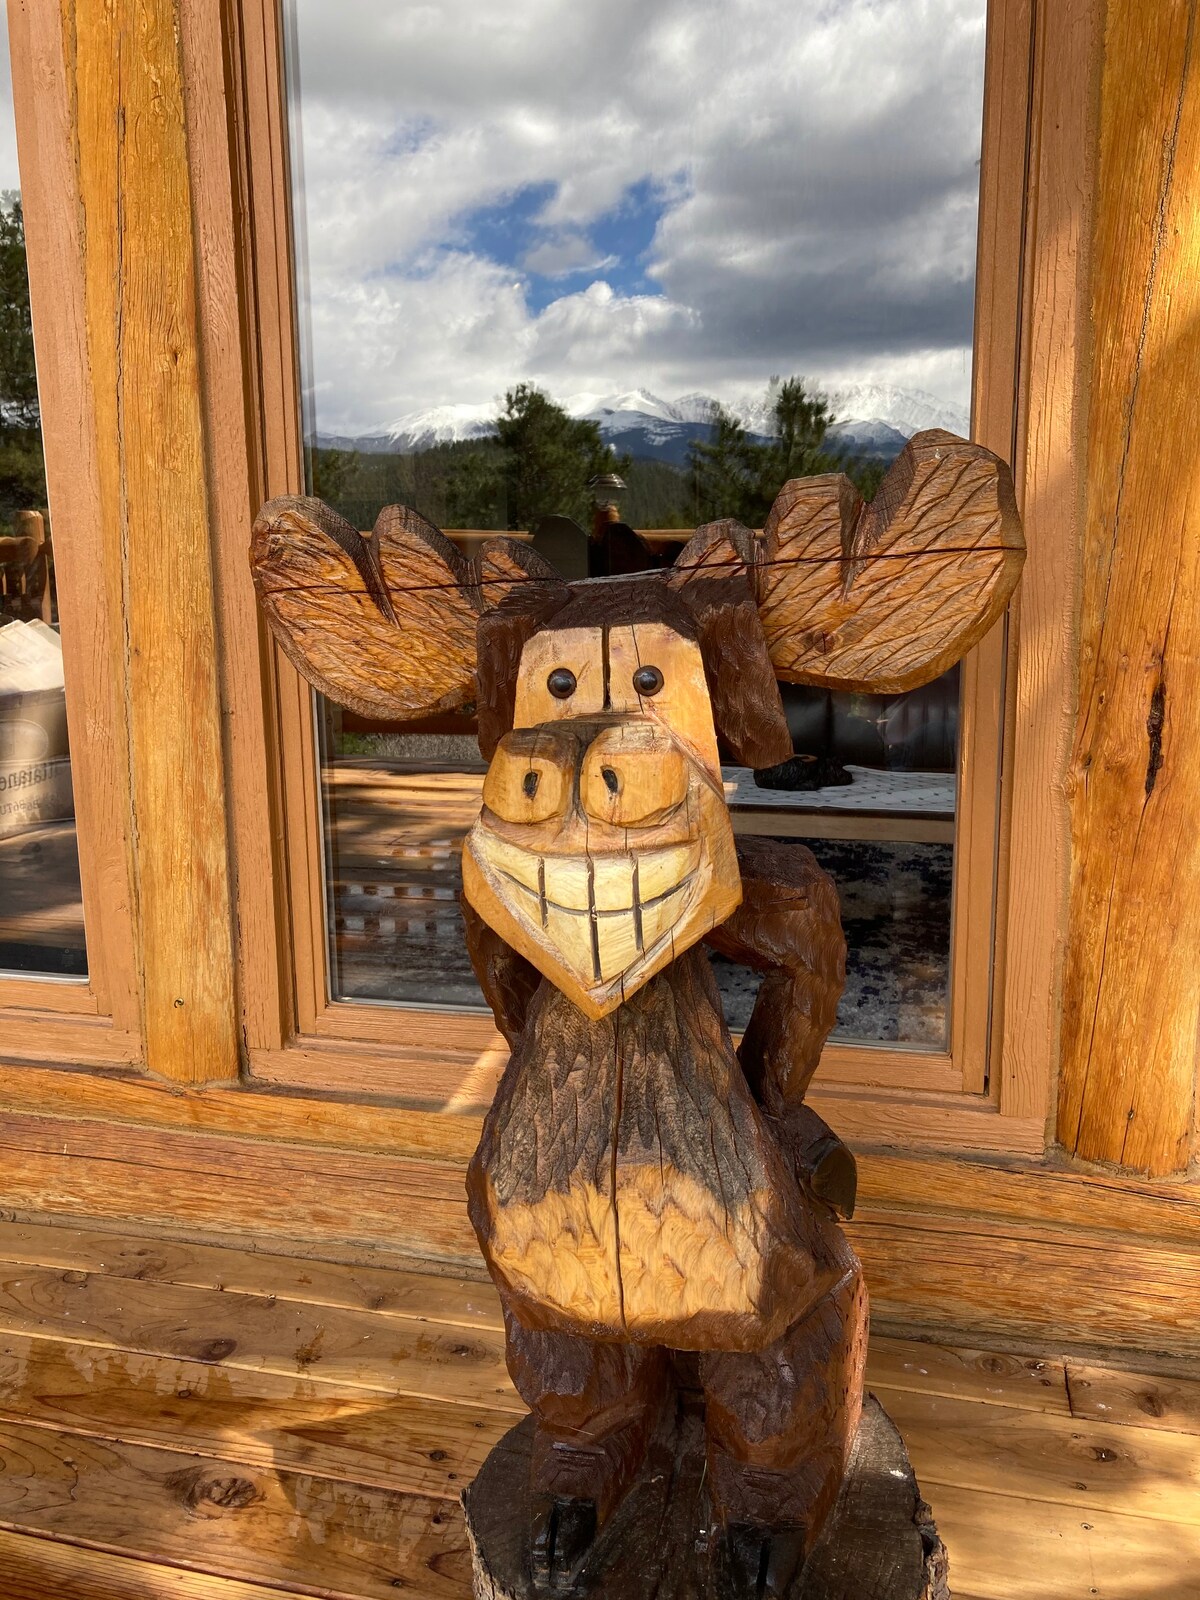 The Smiling Moose木屋，可欣赏派克峰的美景